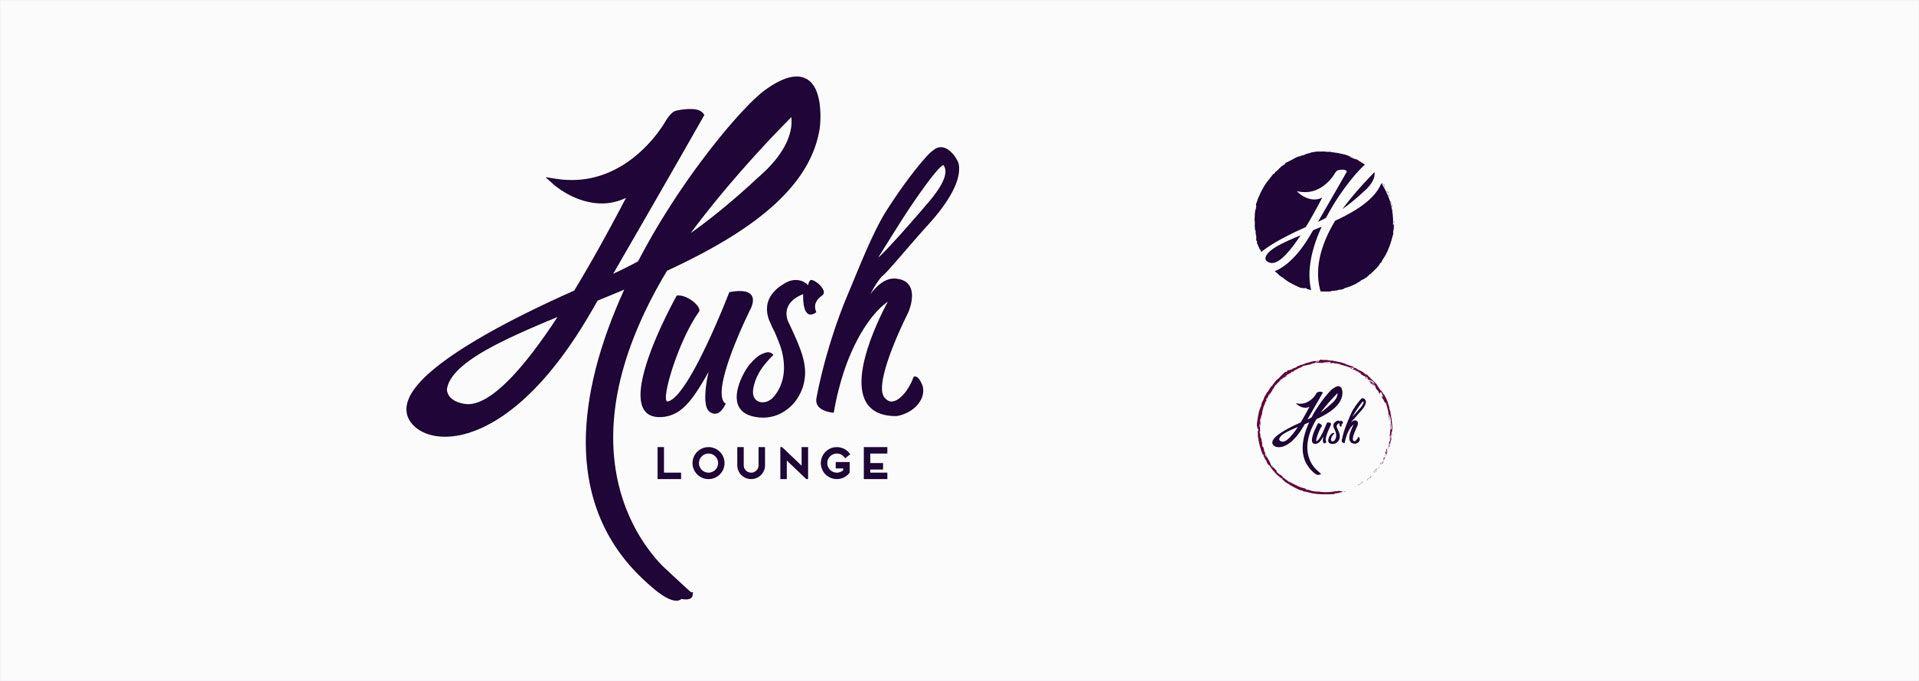 Hush Logo - Revelry Room / Hush Lounge